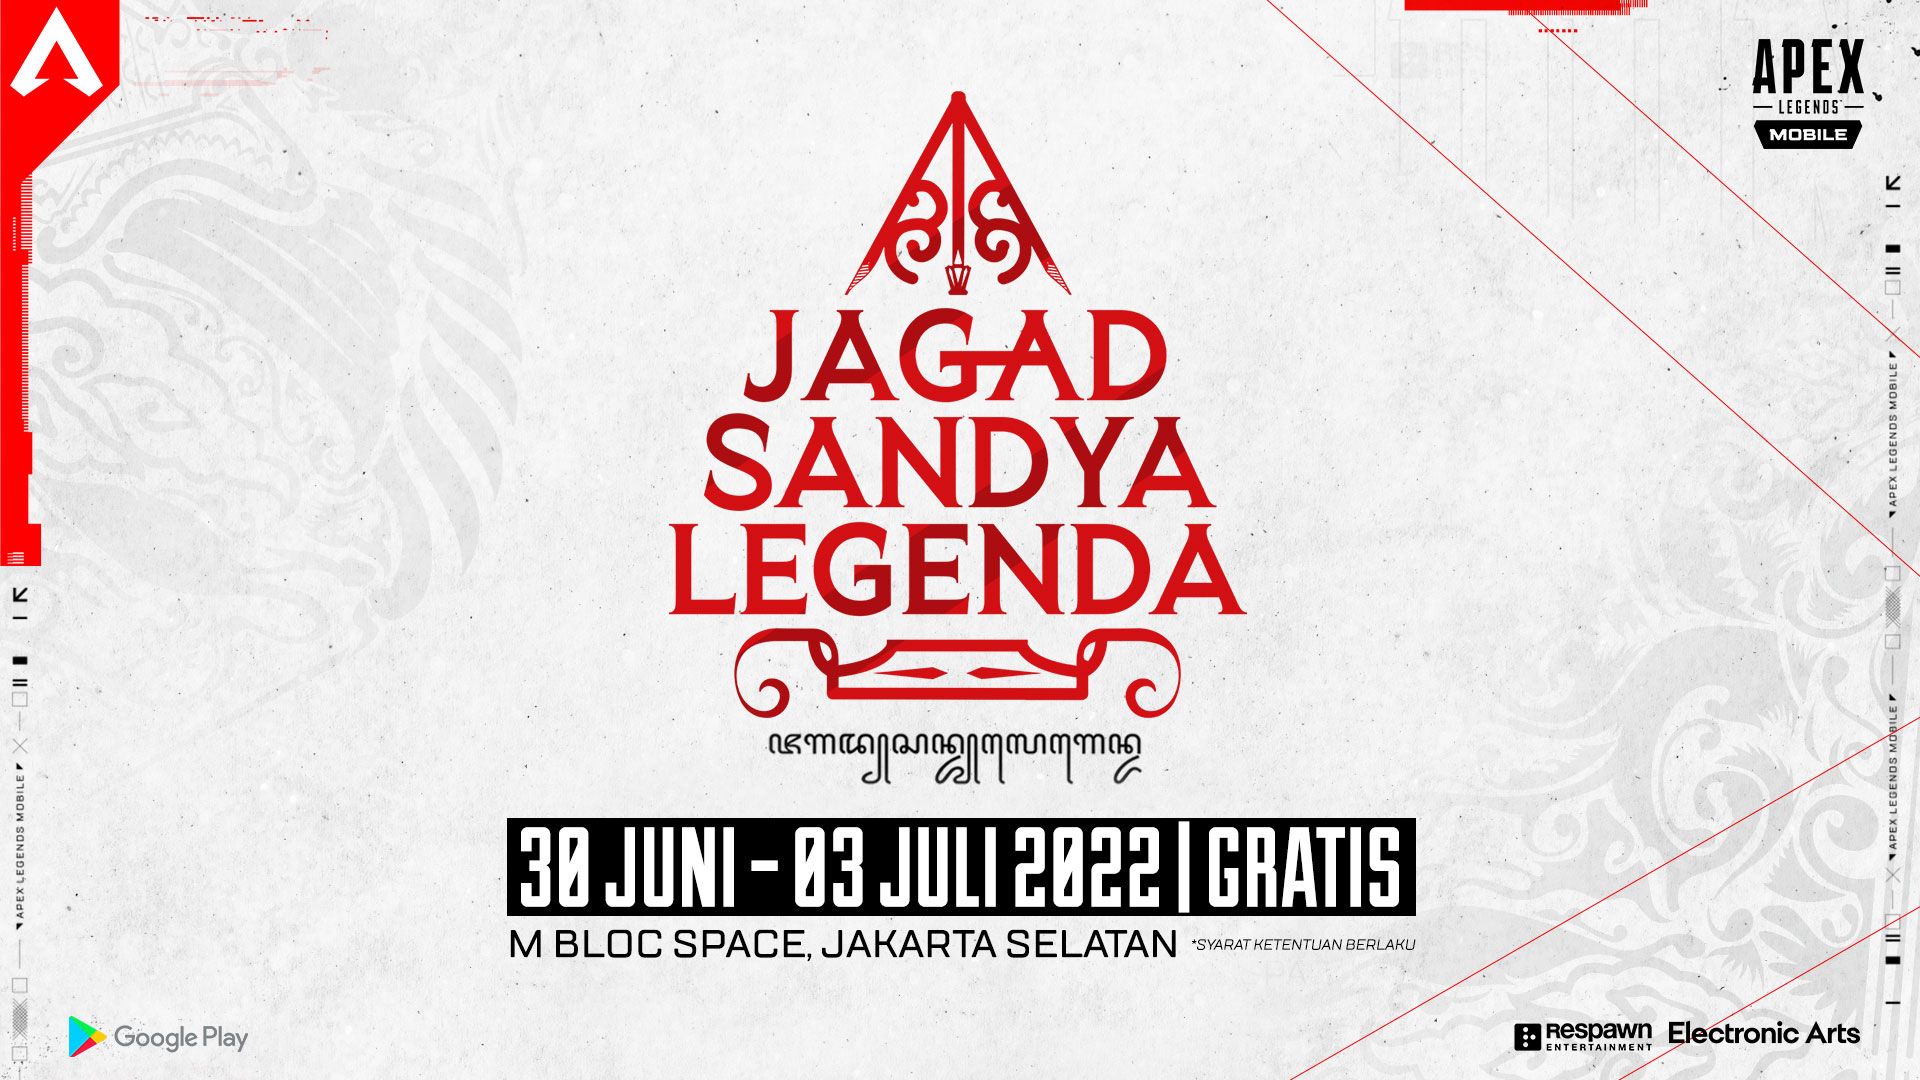 Event dari Apex Legends Mobile, Jagad Sandya Legenda